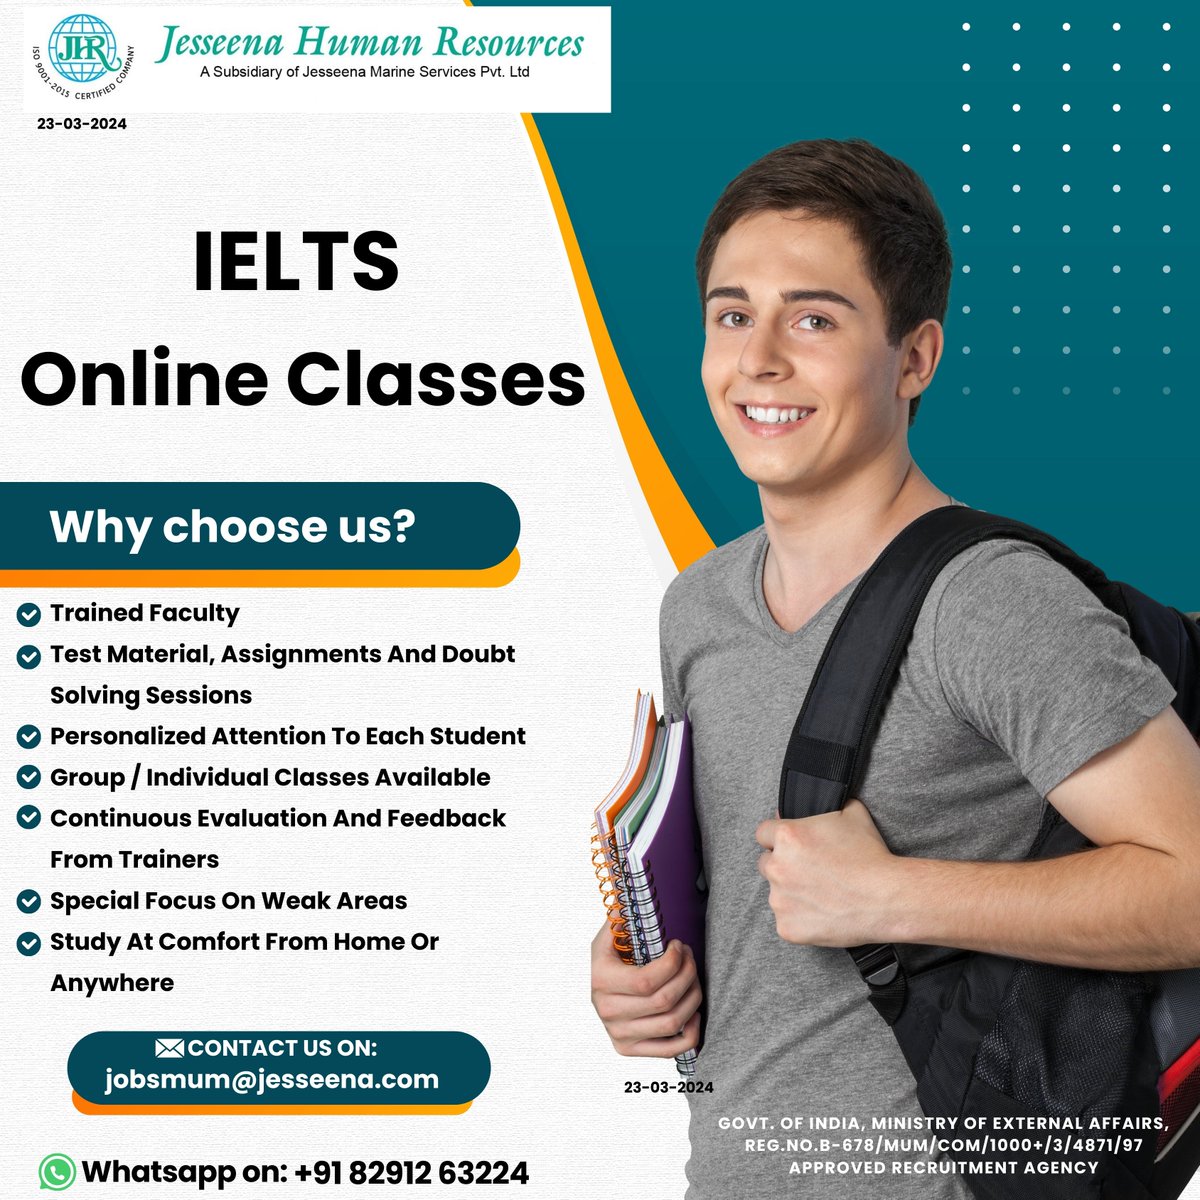 IELTS Online Classes

Contact us on:
jobsmum@jesseena.com

#ielts #onlineclasses #testprep #trainedfaculty #personalizedattention #feedback #doubtsolving #studyfromhome #individualclasses #groupclasses